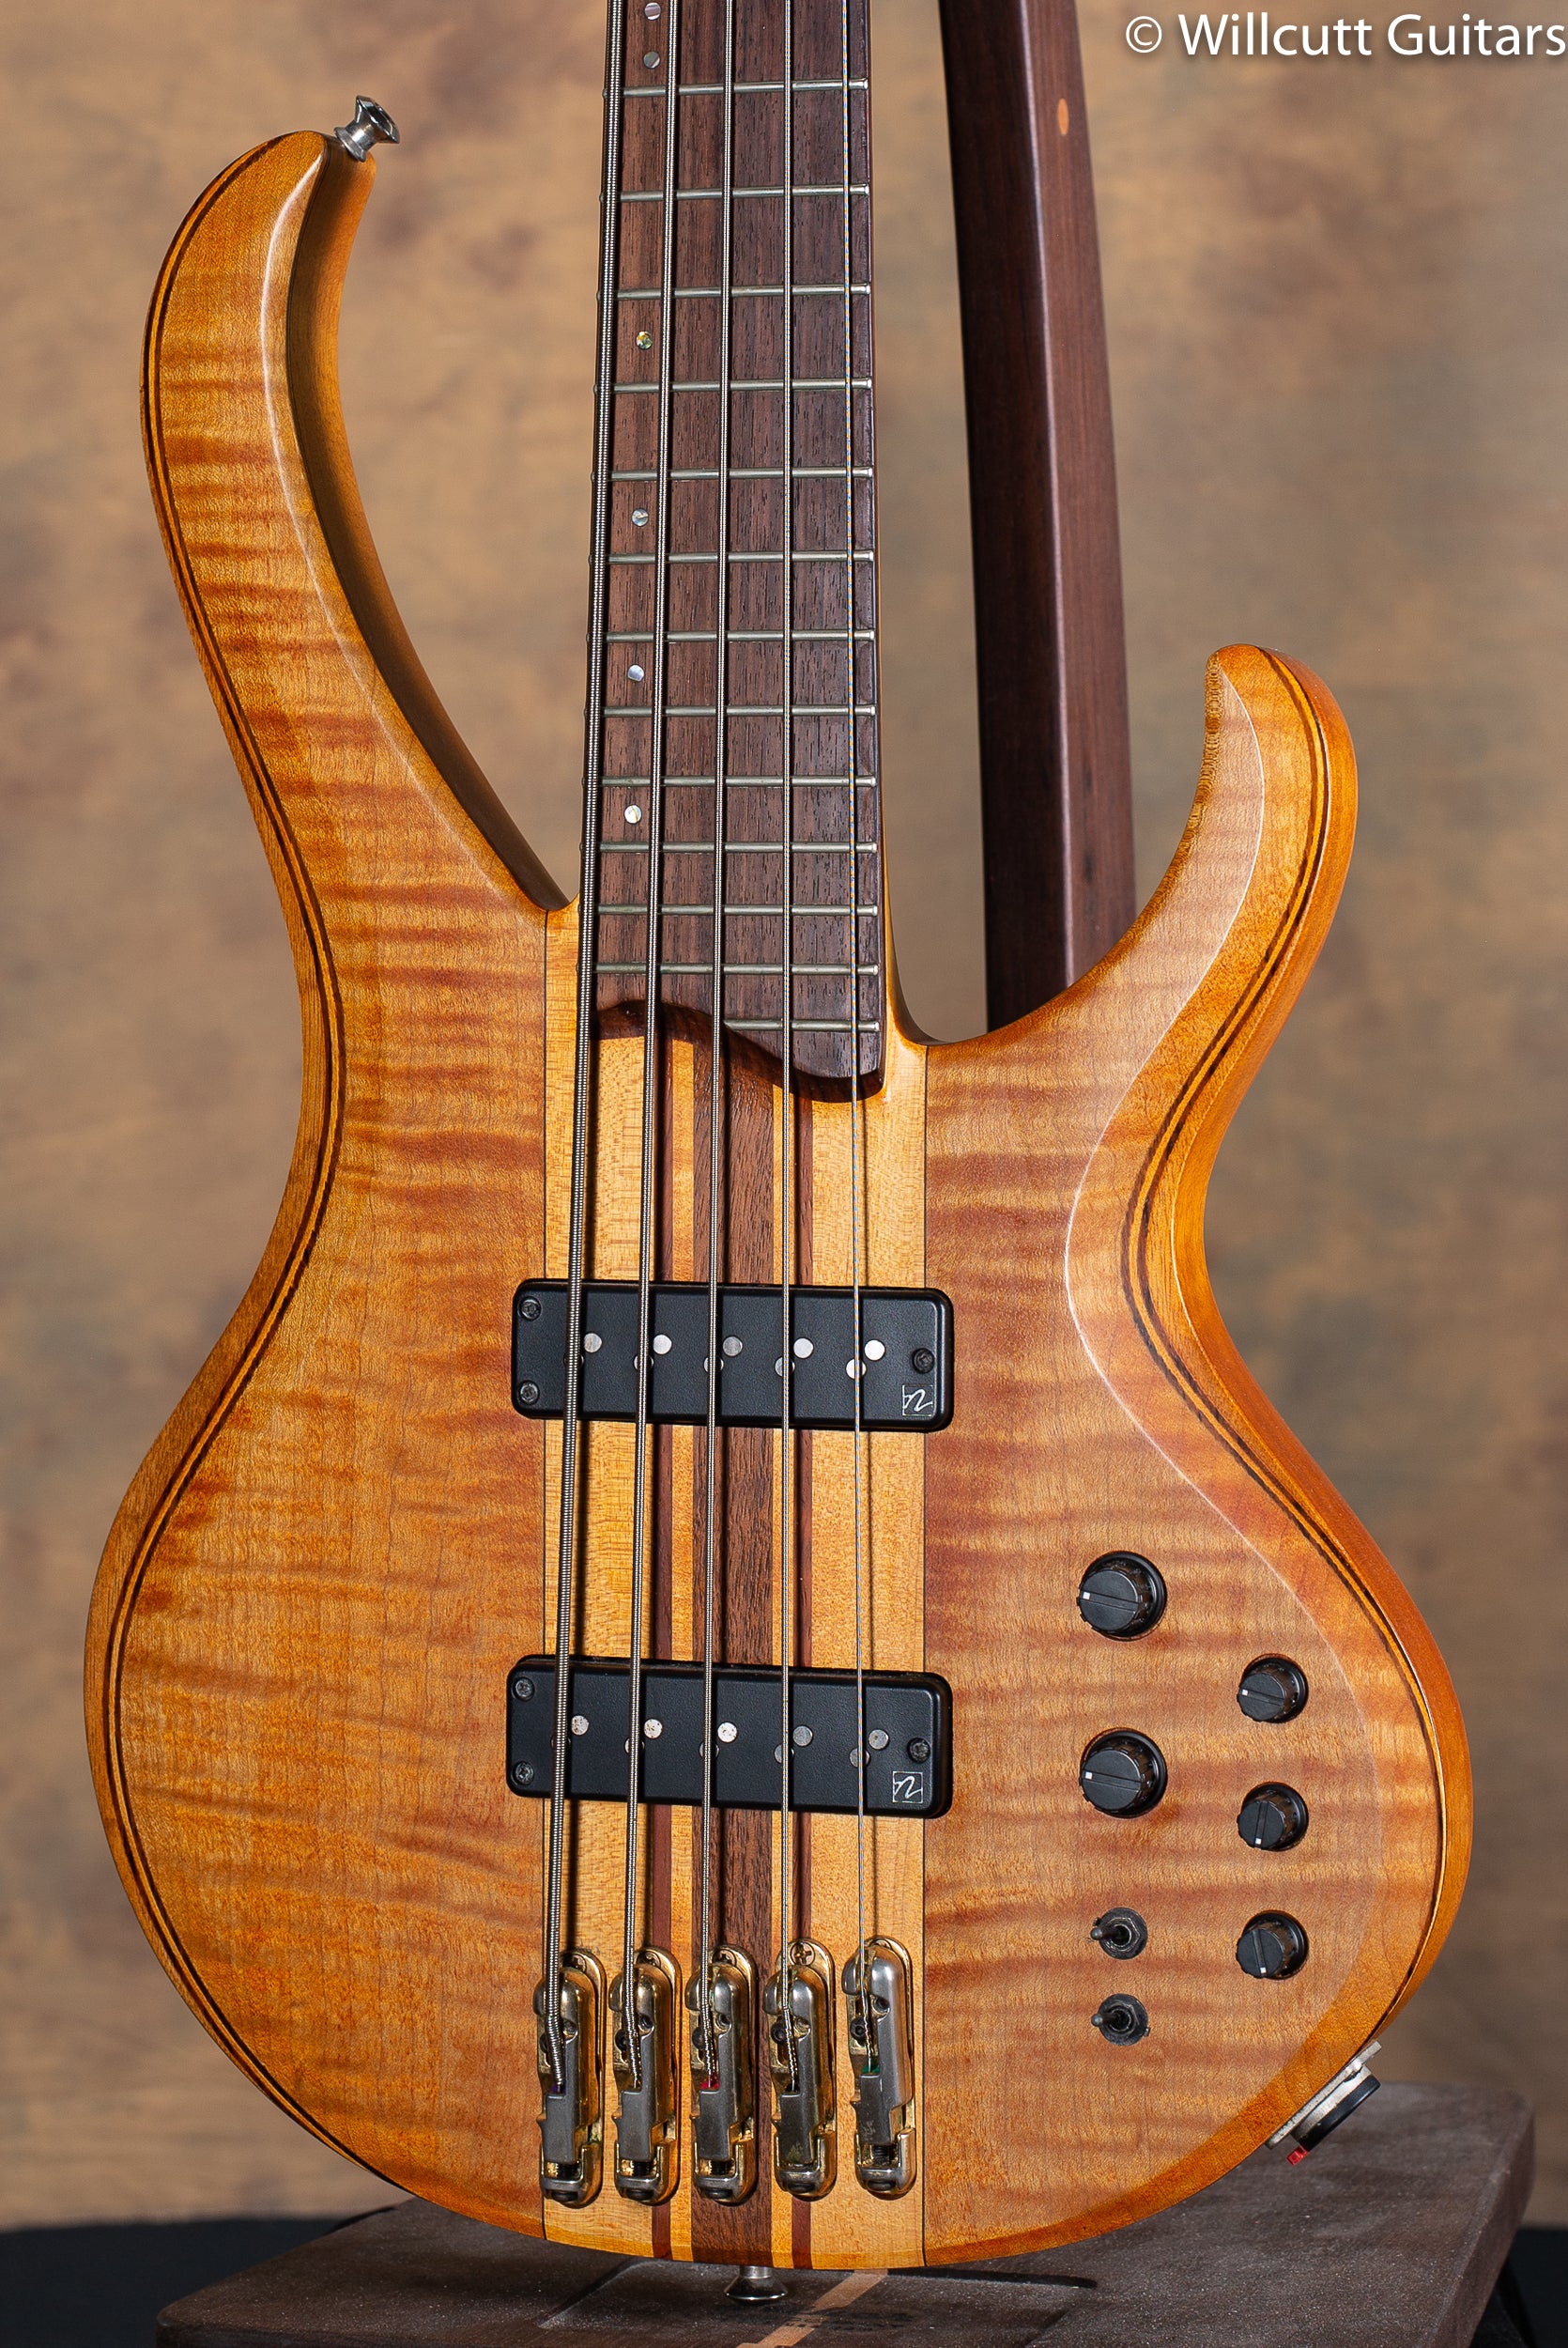 Ibanez BTB 1405 Premium 5 String Bass - Willcutt Guitars